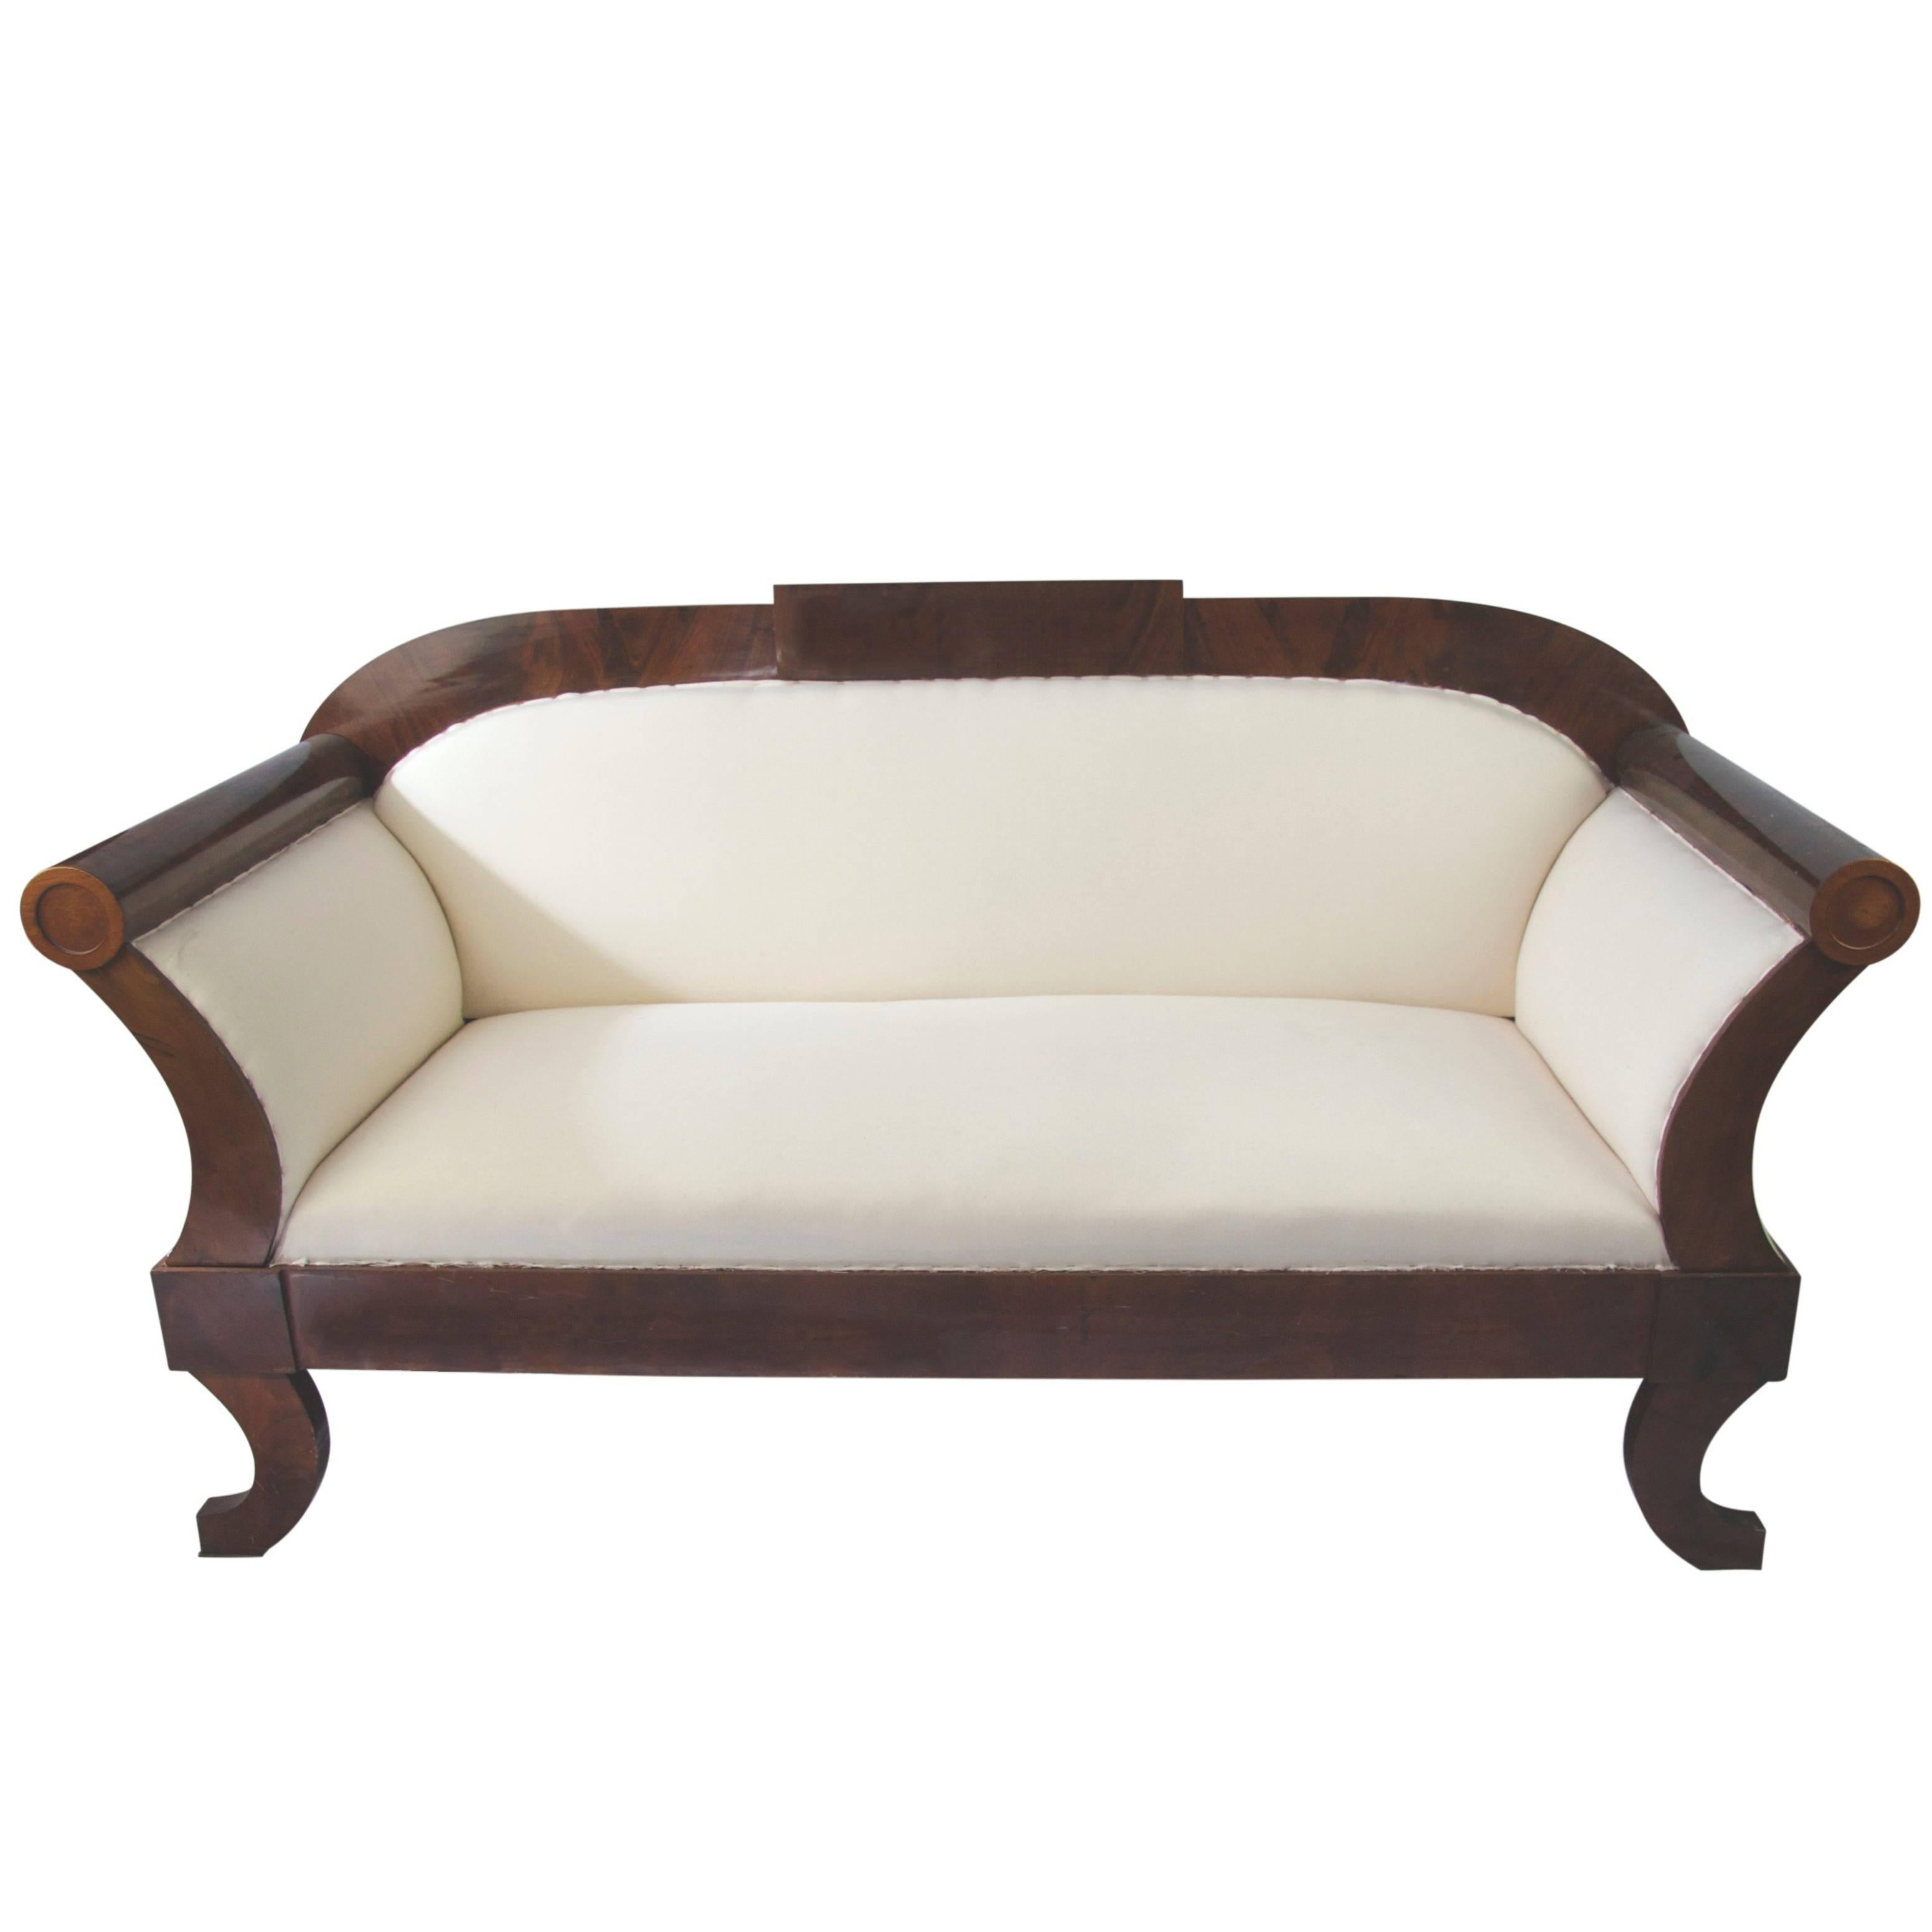 Antique Swedish Biedermeier Figured Mahogany Carved Three-Seat Sofa Late 1800s